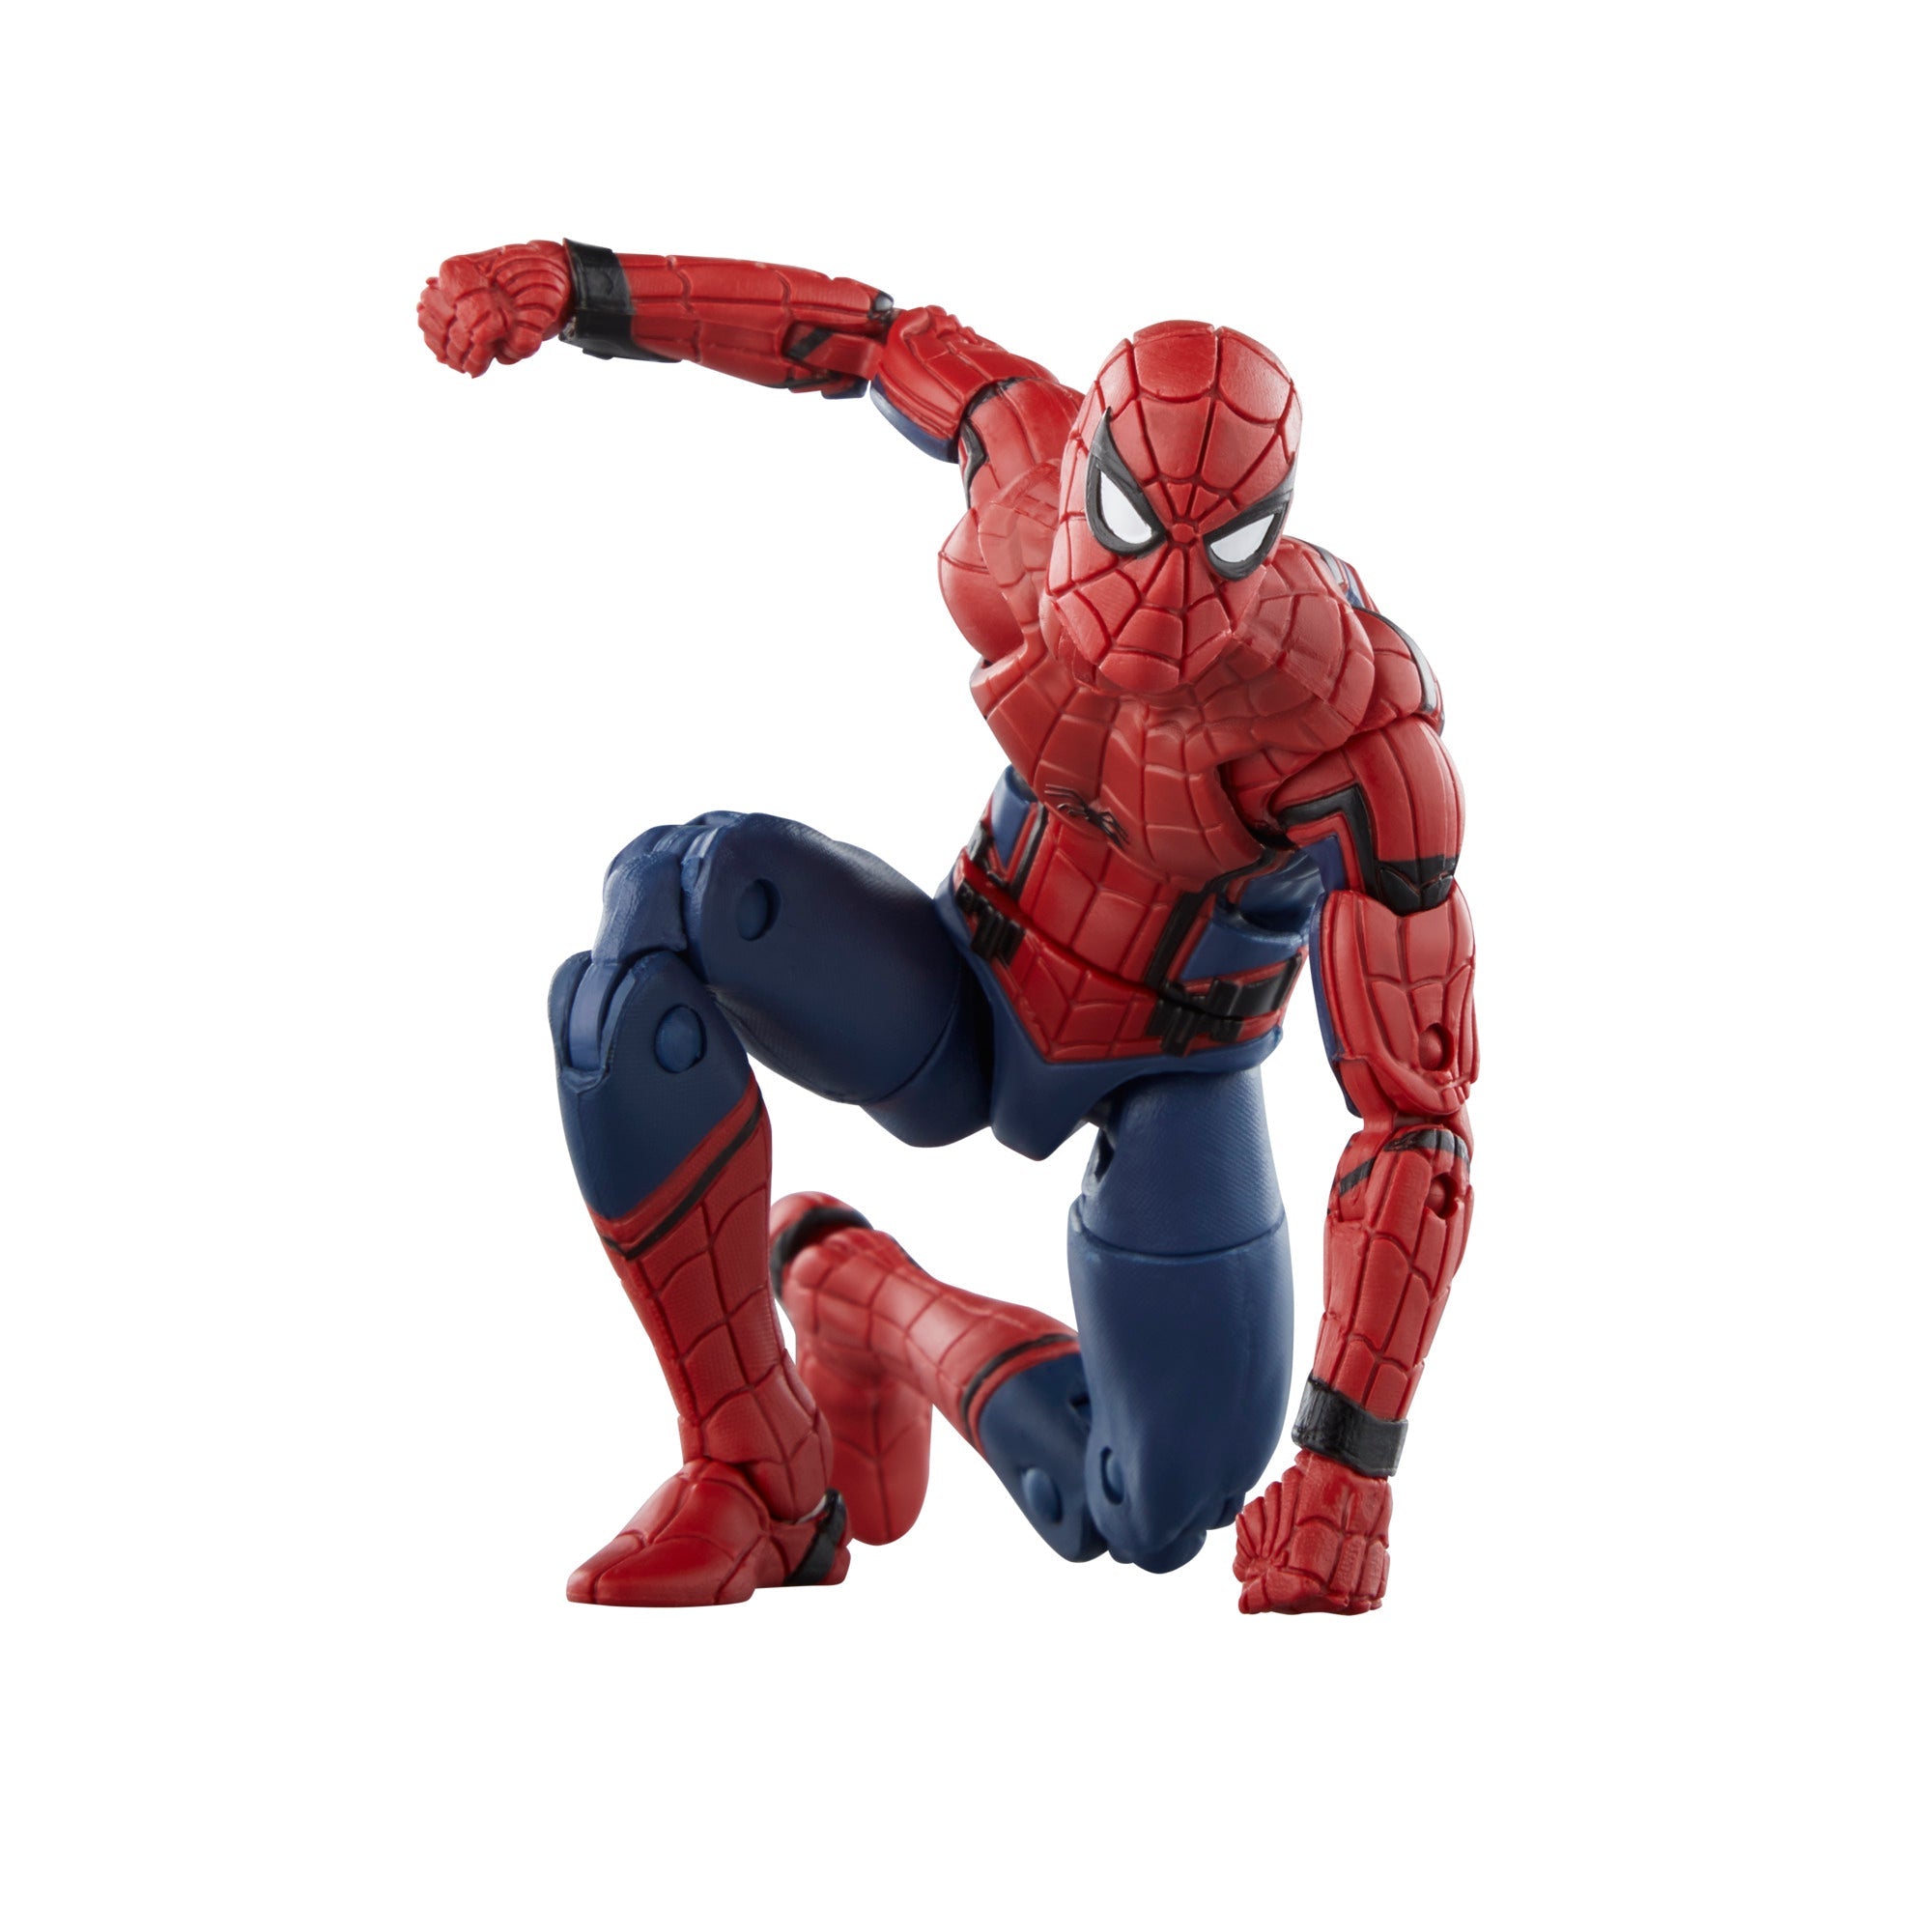 Marvel Legends Spider-Man Awesome Pose Works? - YouTube